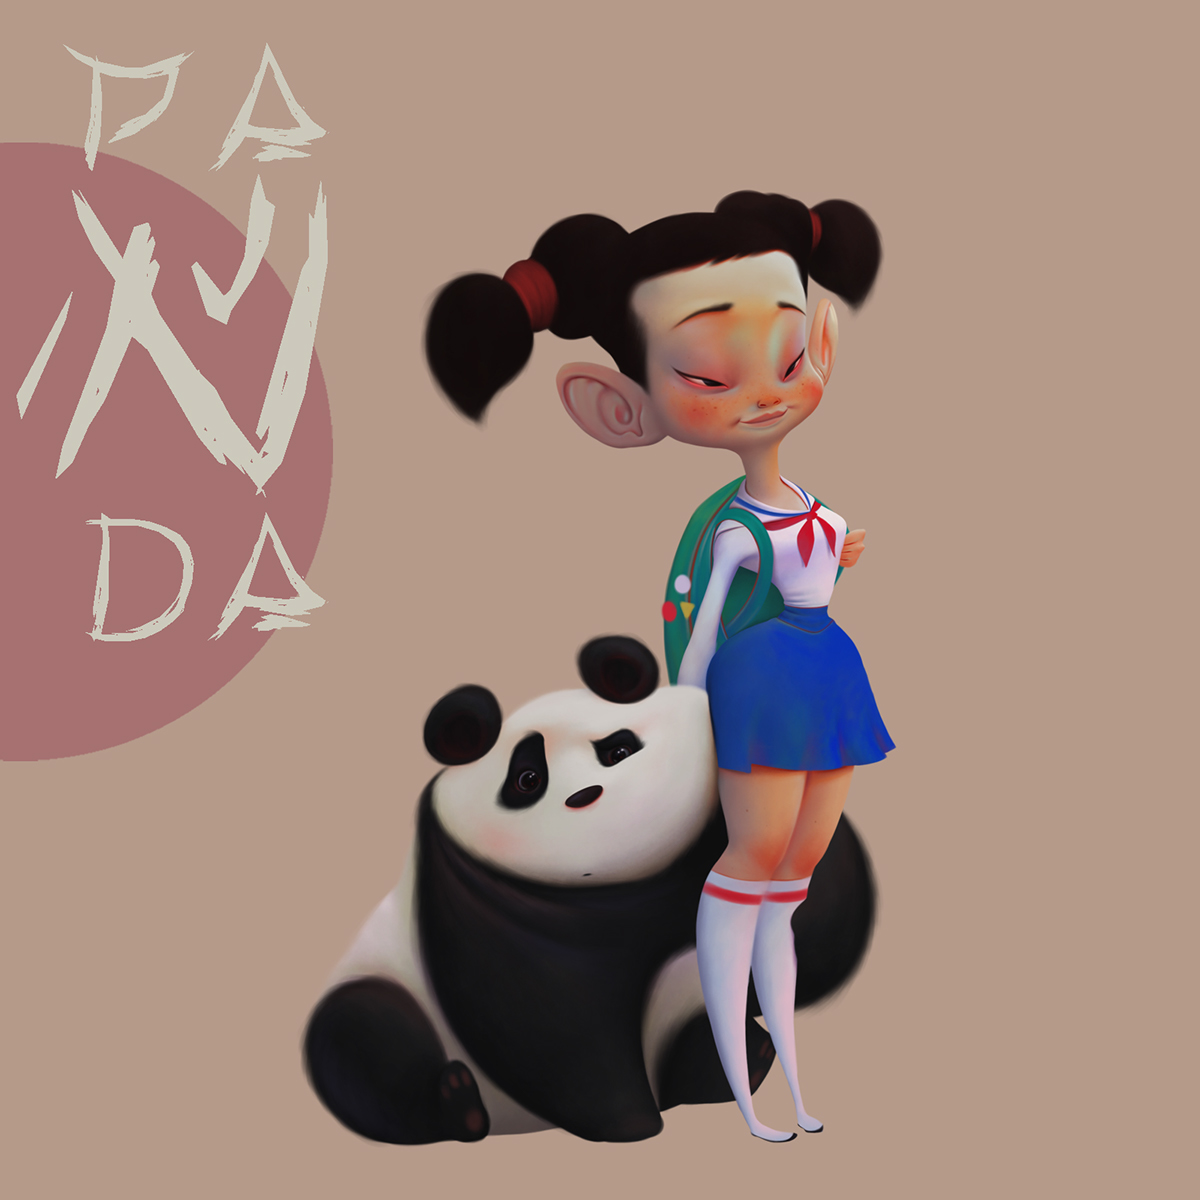 panda character design by dmitry dmitriev